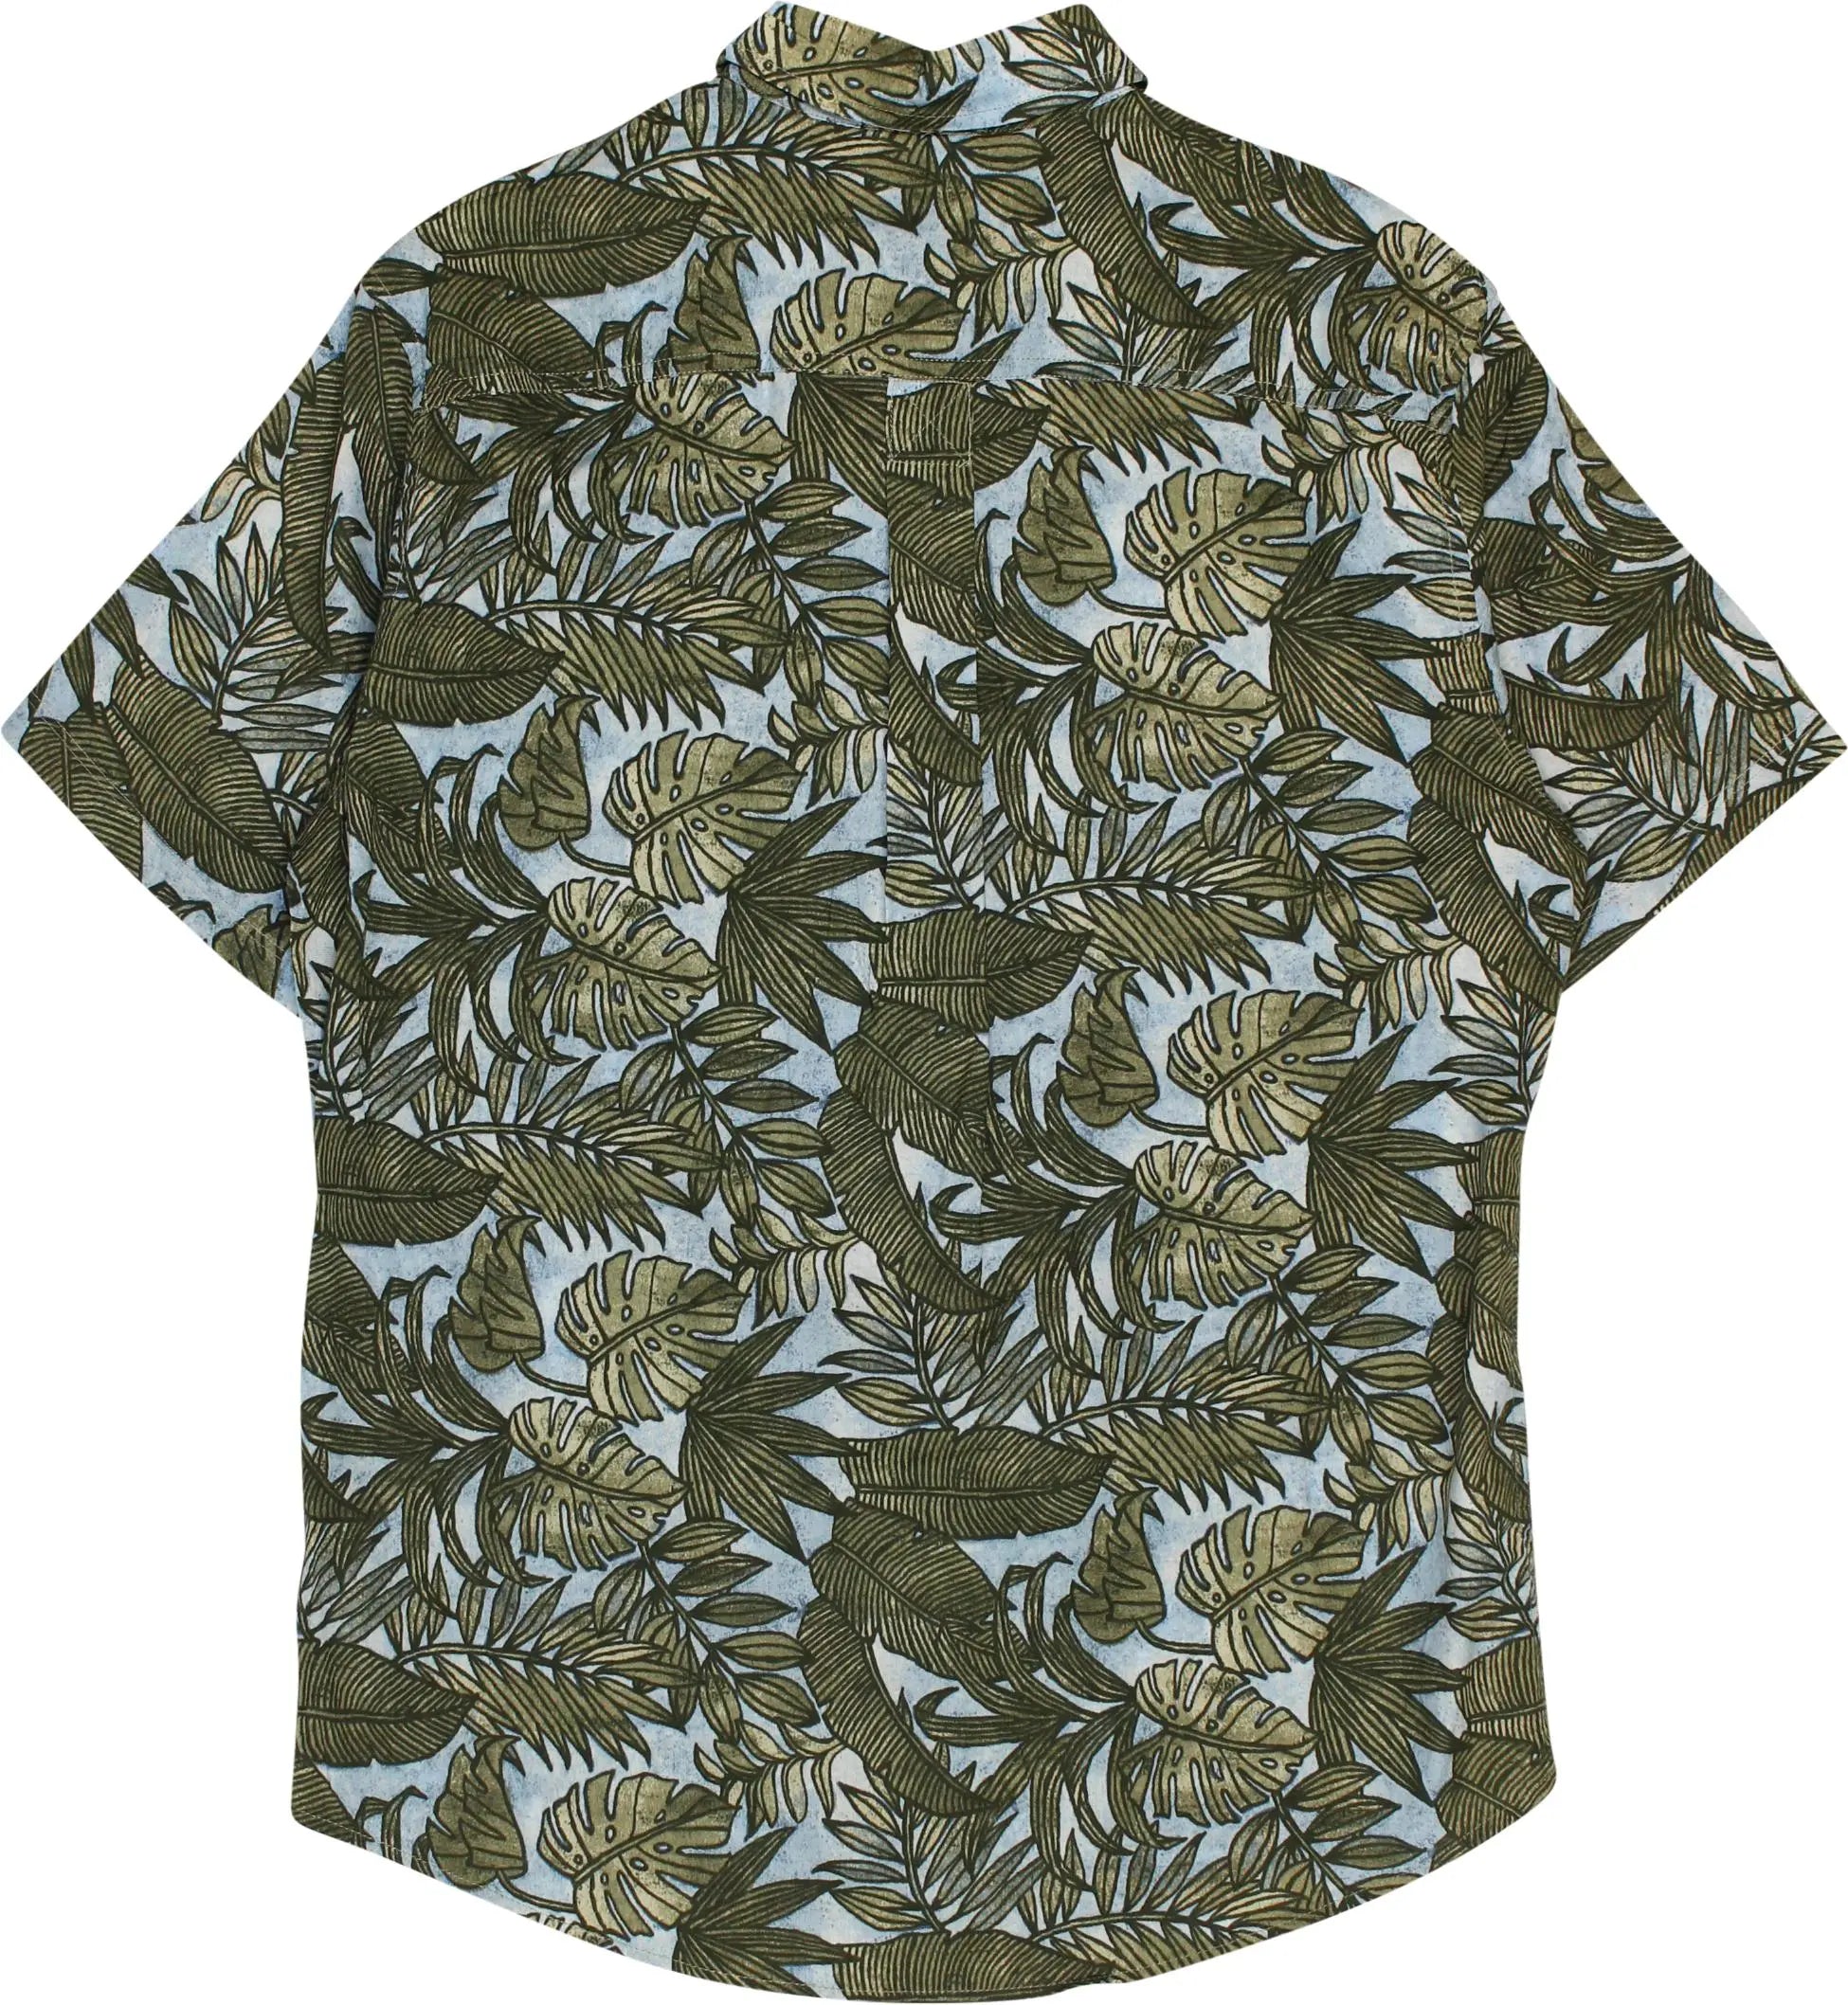 Eddie Bauer - Hawaiian Shirt by Eddie Bauer- ThriftTale.com - Vintage and second handclothing